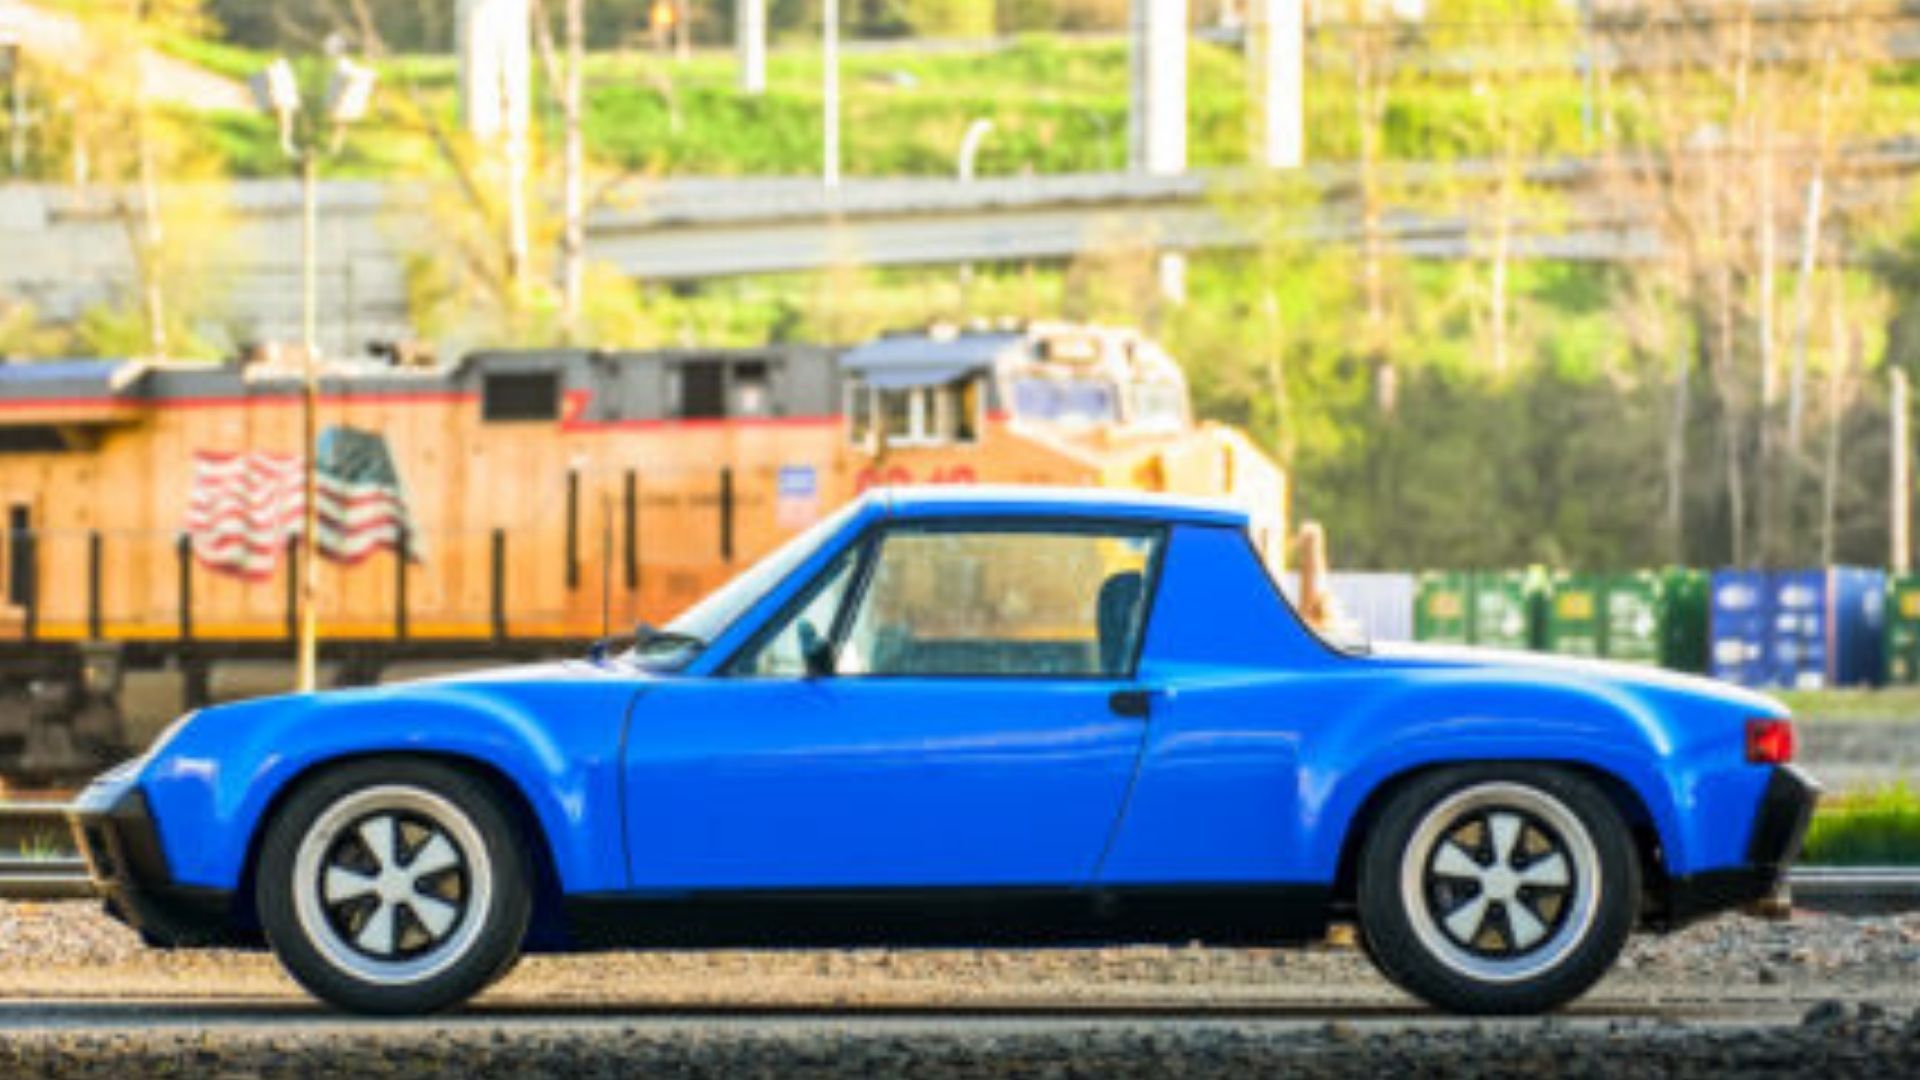 Get Your Kicks In This 3.6-Liter 1972 Porsche 914 Track Missile 